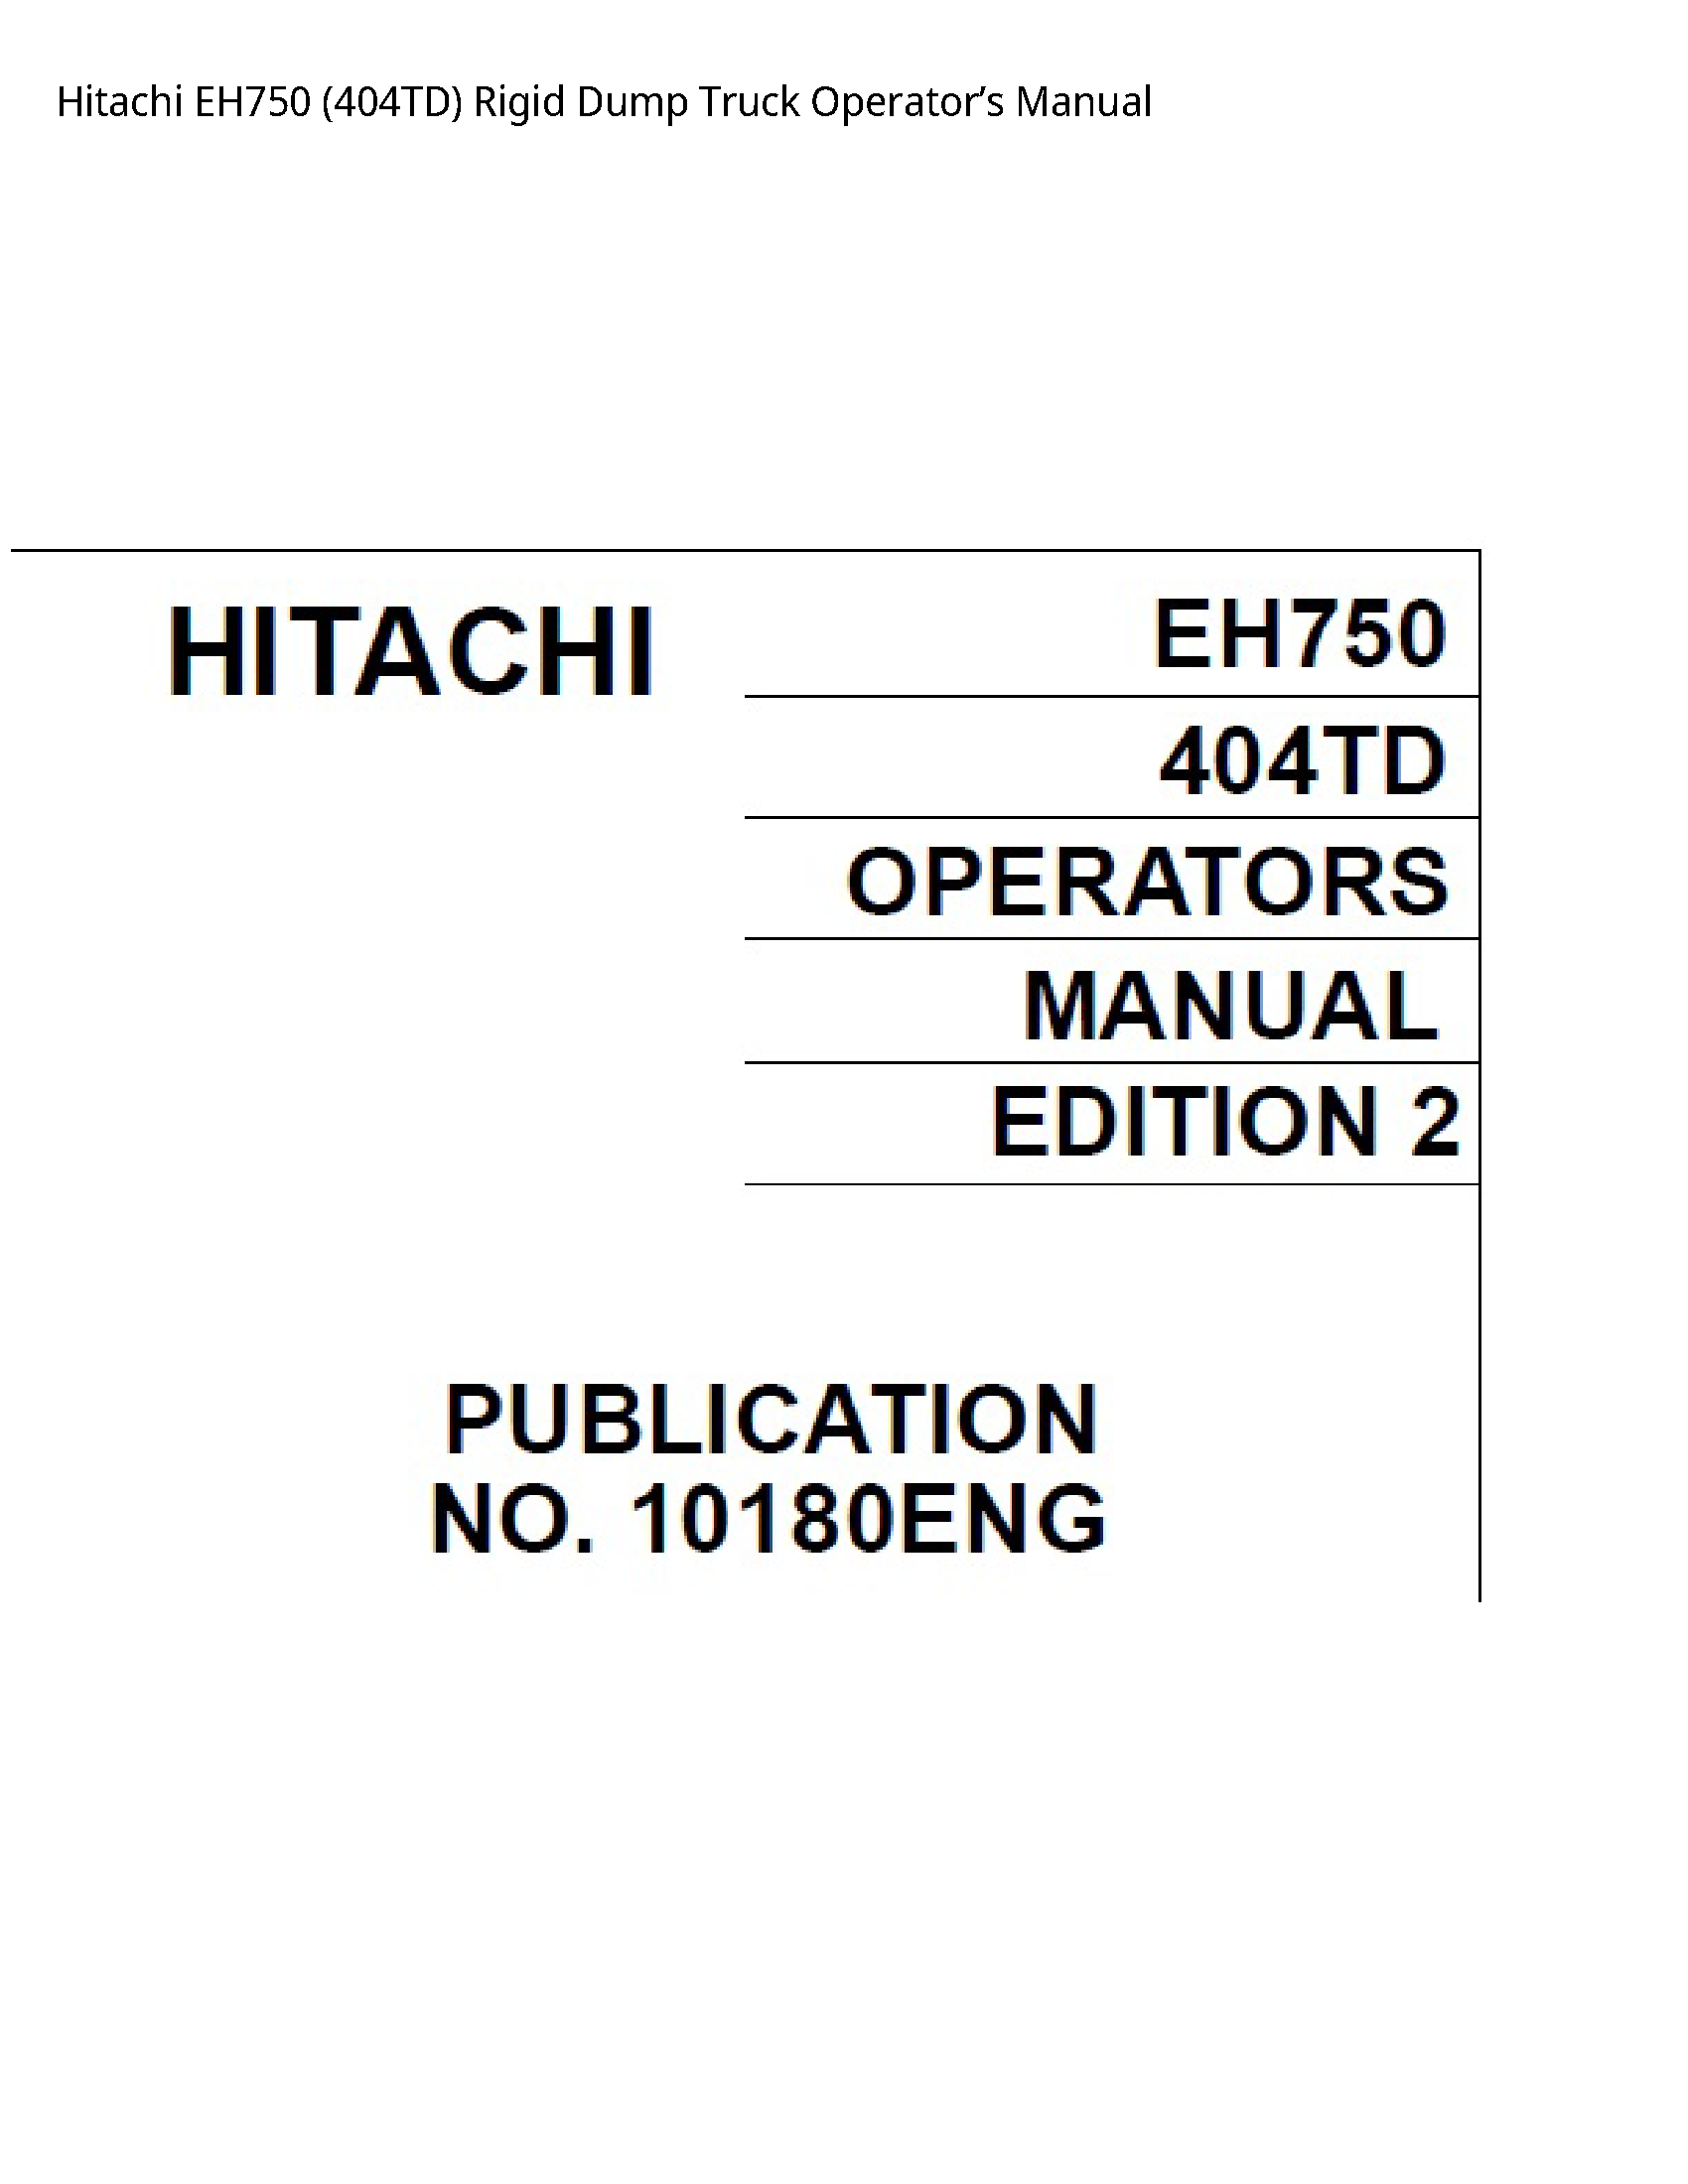 Hitachi EH750 Rigid Dump Truck Operator’s manual